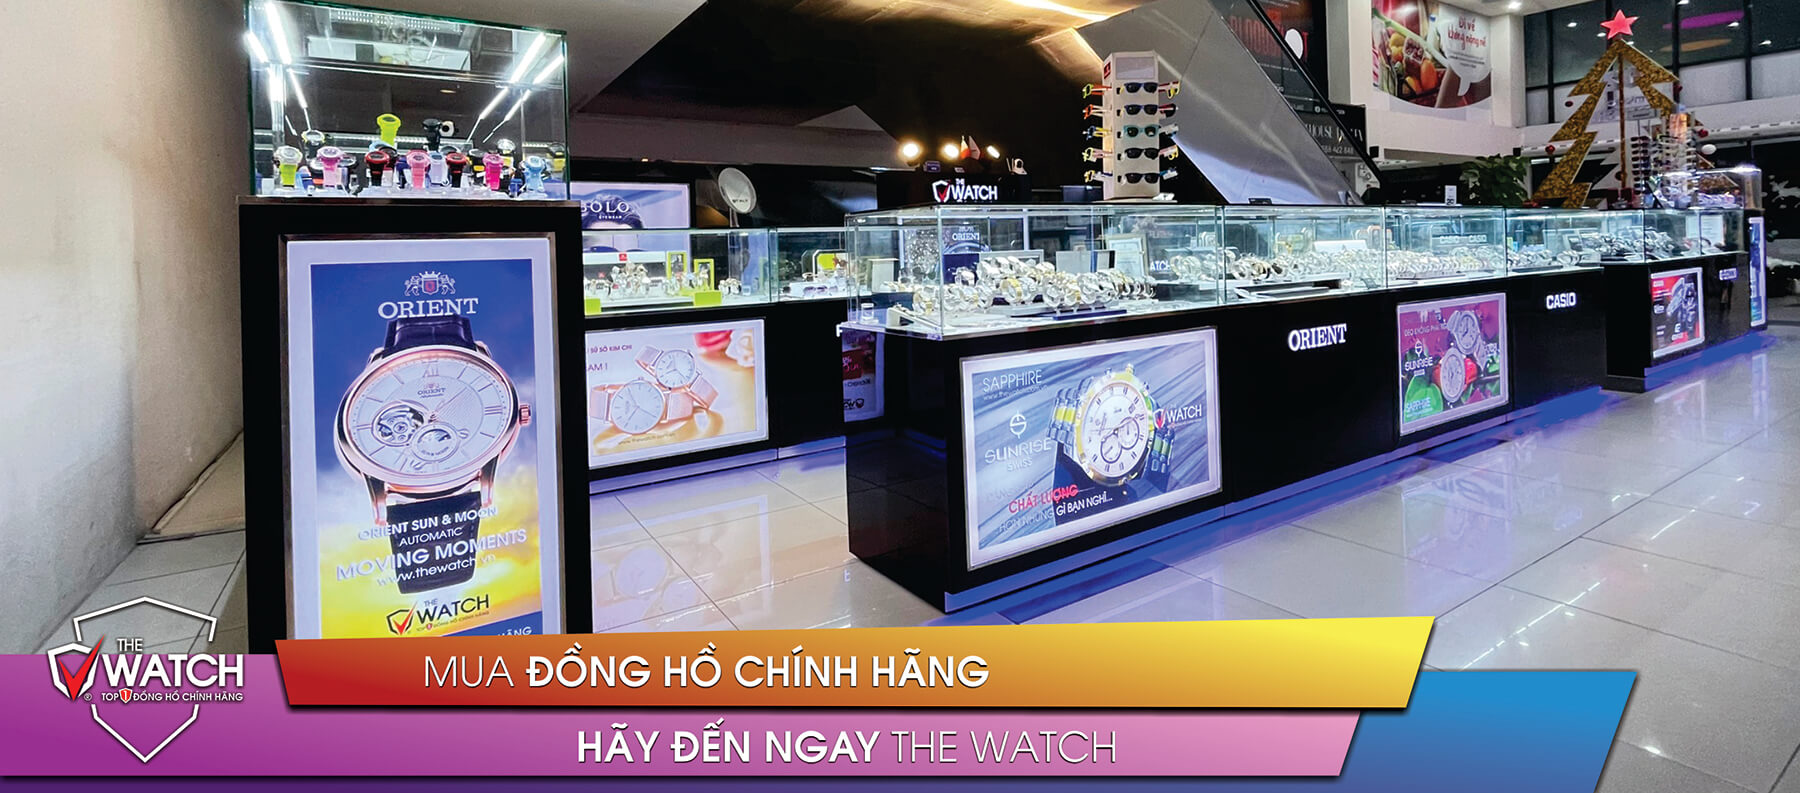 Dong ho chinh hang - the watch